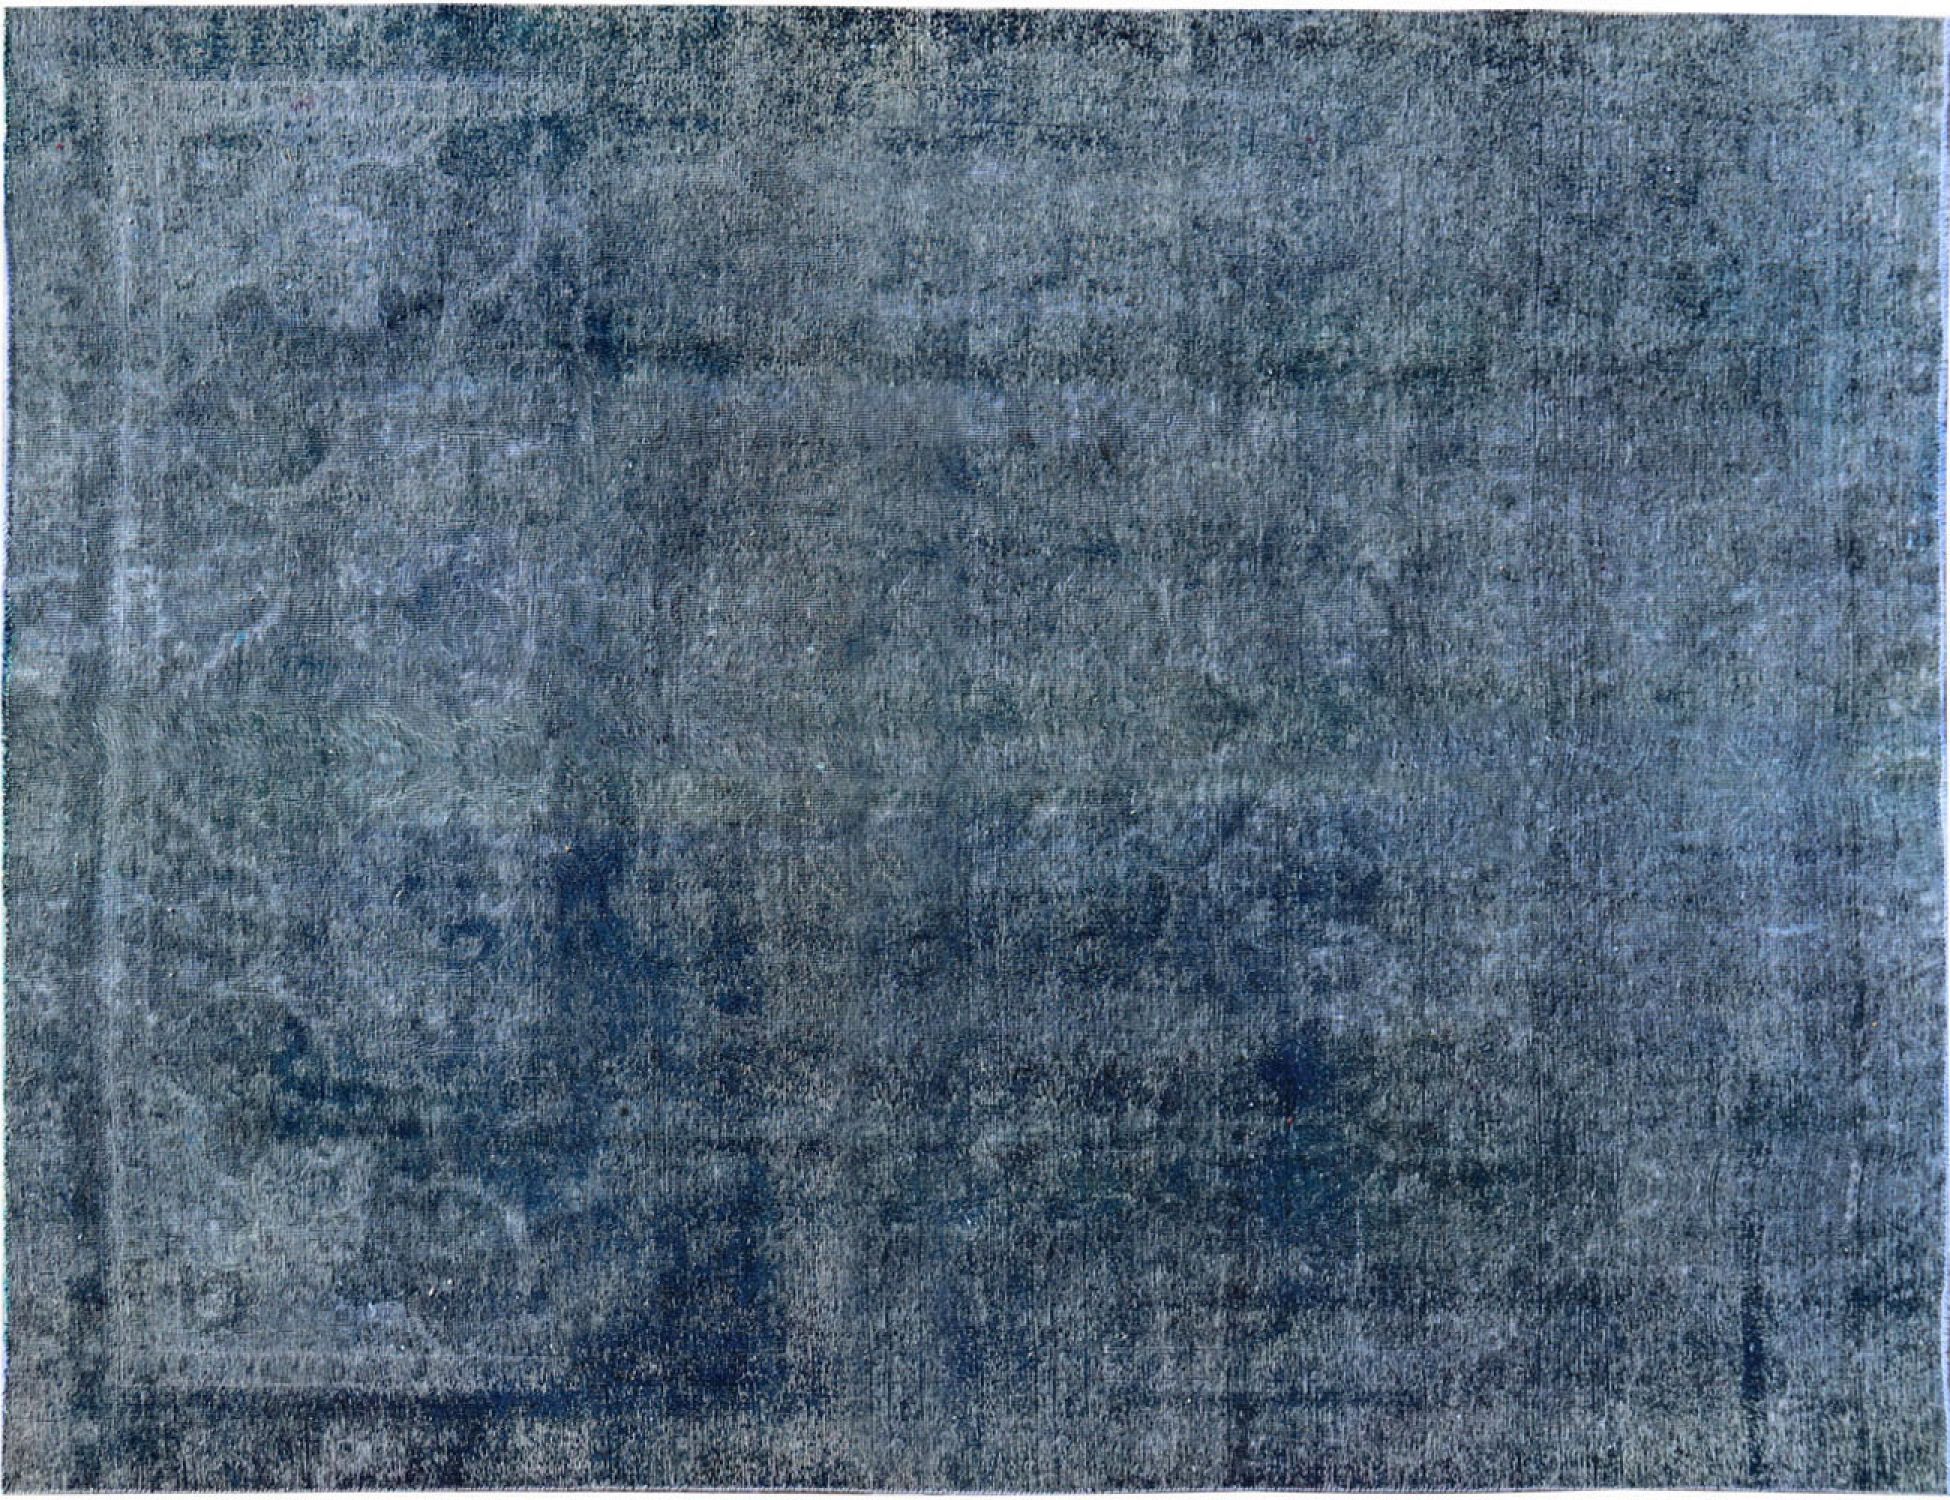 Vintage    Μπλε <br/>330 x 248 cm